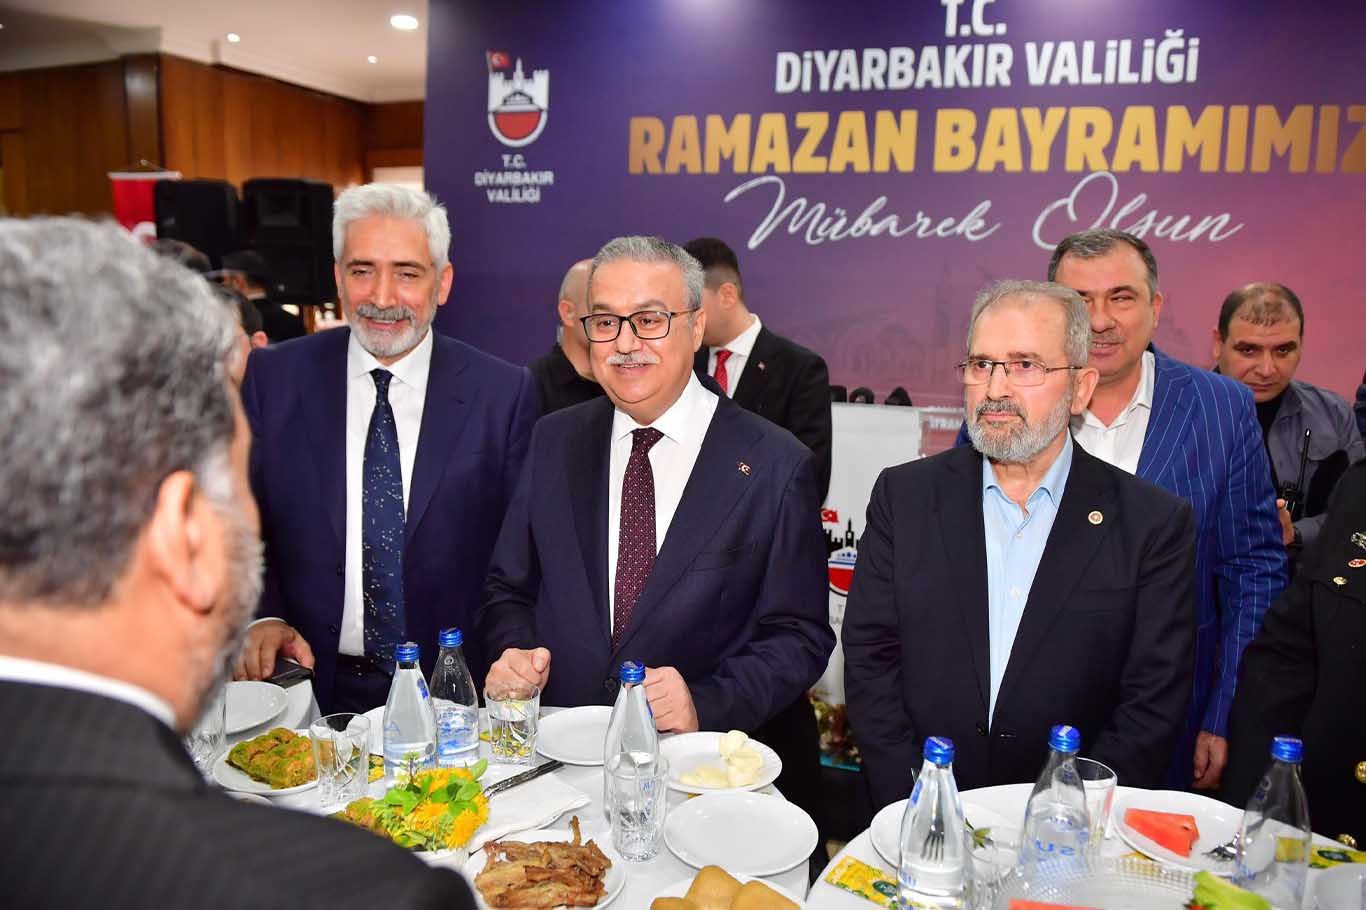 Diyarbakır'da Bayramlaşma Programı 4